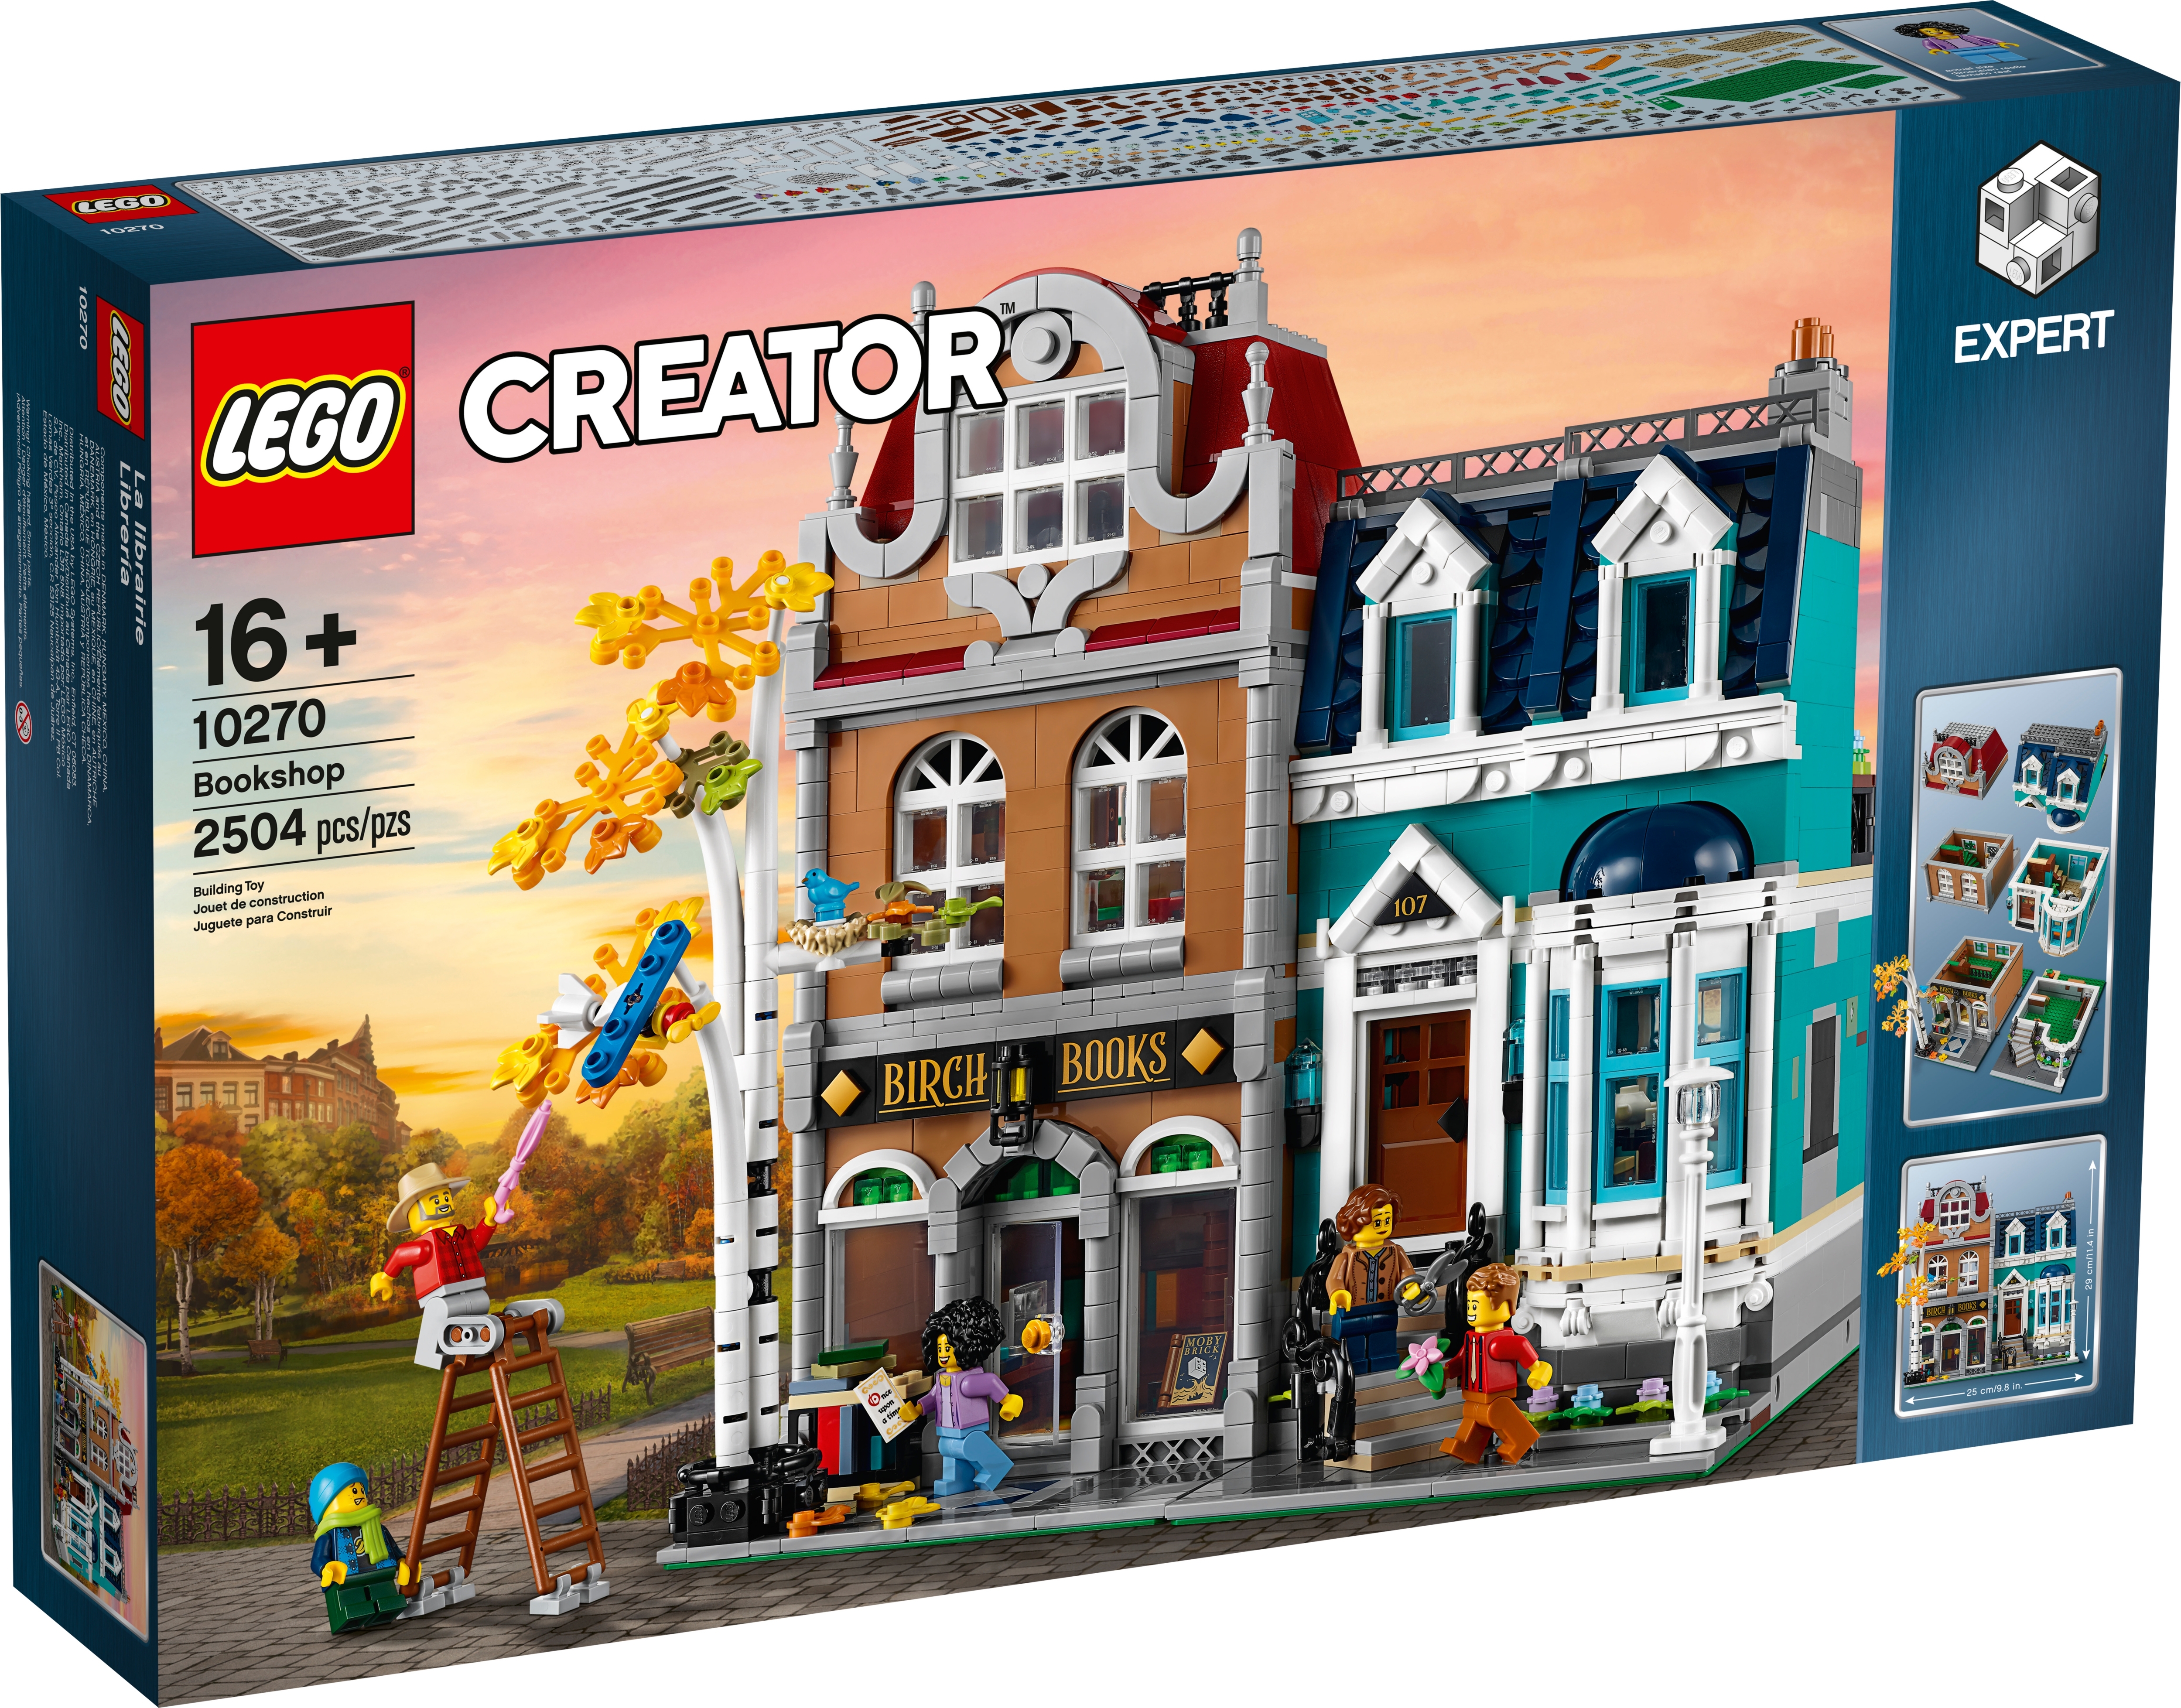 LEGO 10270 CREATOR EXPERT LIBRERIA BOOKSHOP - MISB 2020 IN STOCK 